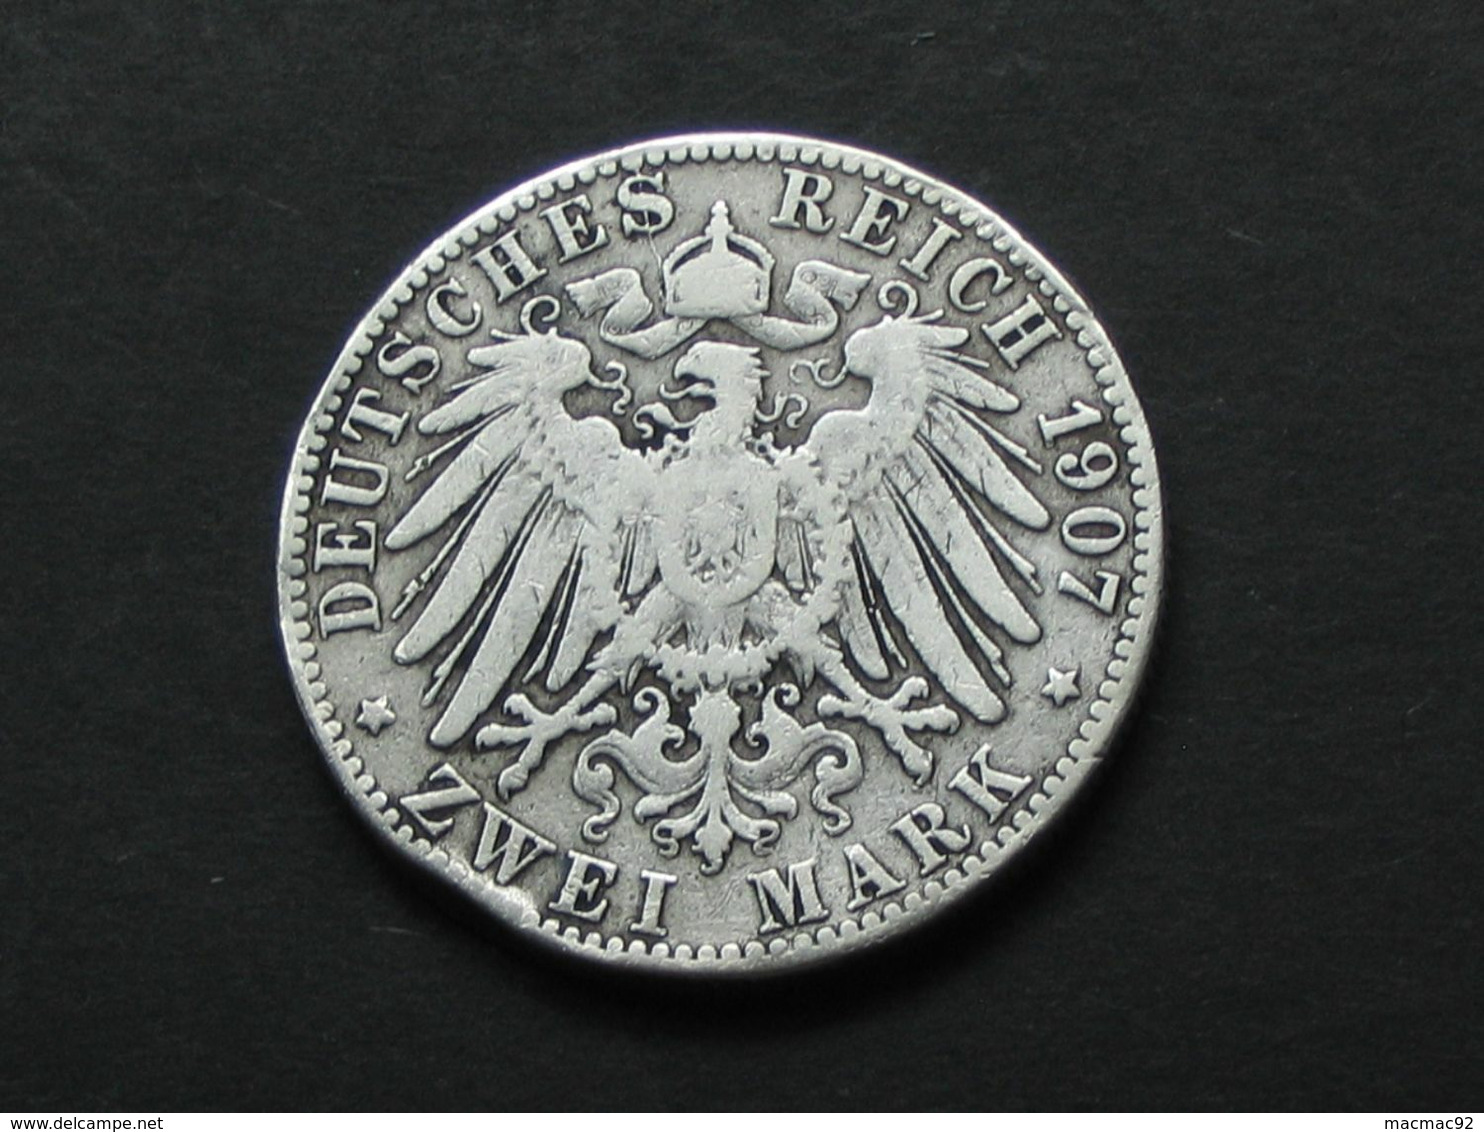 2 Zwei Mark 1907 J - Allemagne - Germany - Hamburg  ***** EN ACHAT IMMEDIAT ***** - 2, 3 & 5 Mark Silber